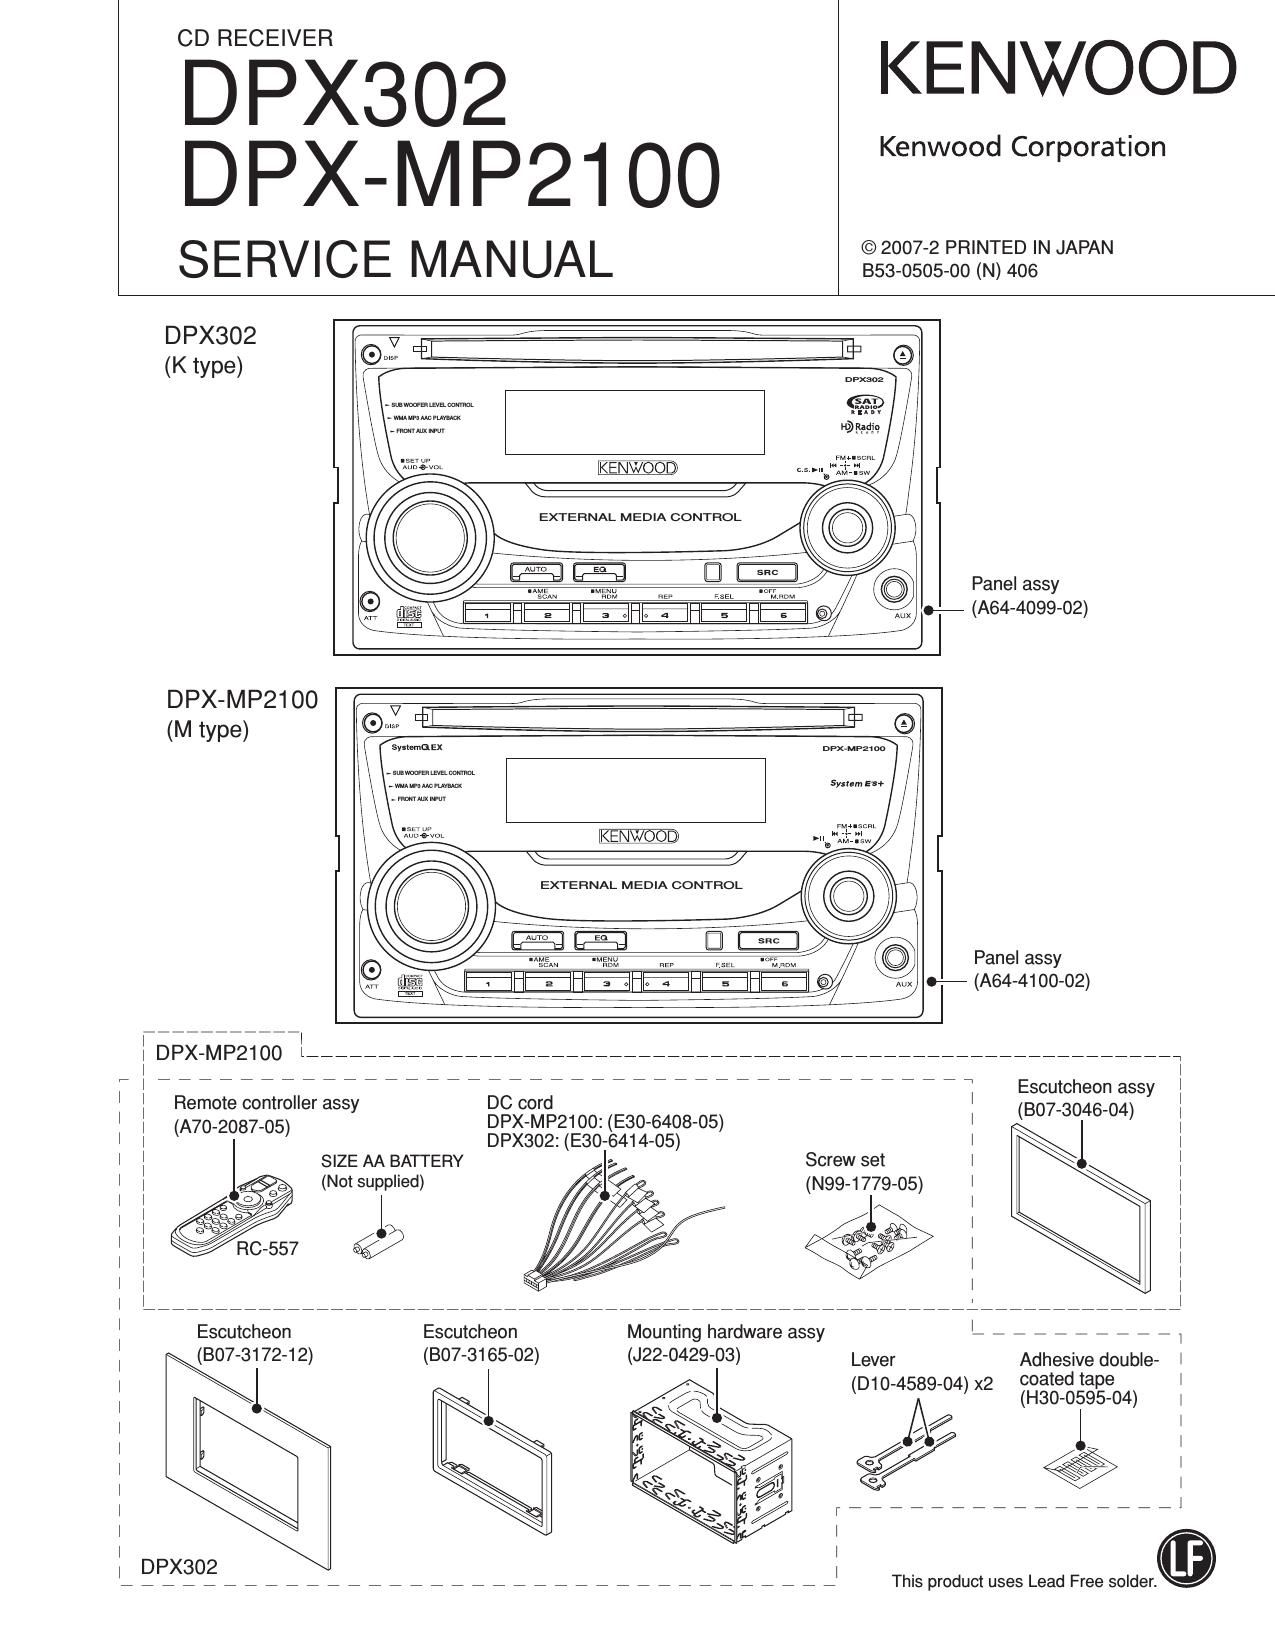 Kenwood DPX 302 Service Manual